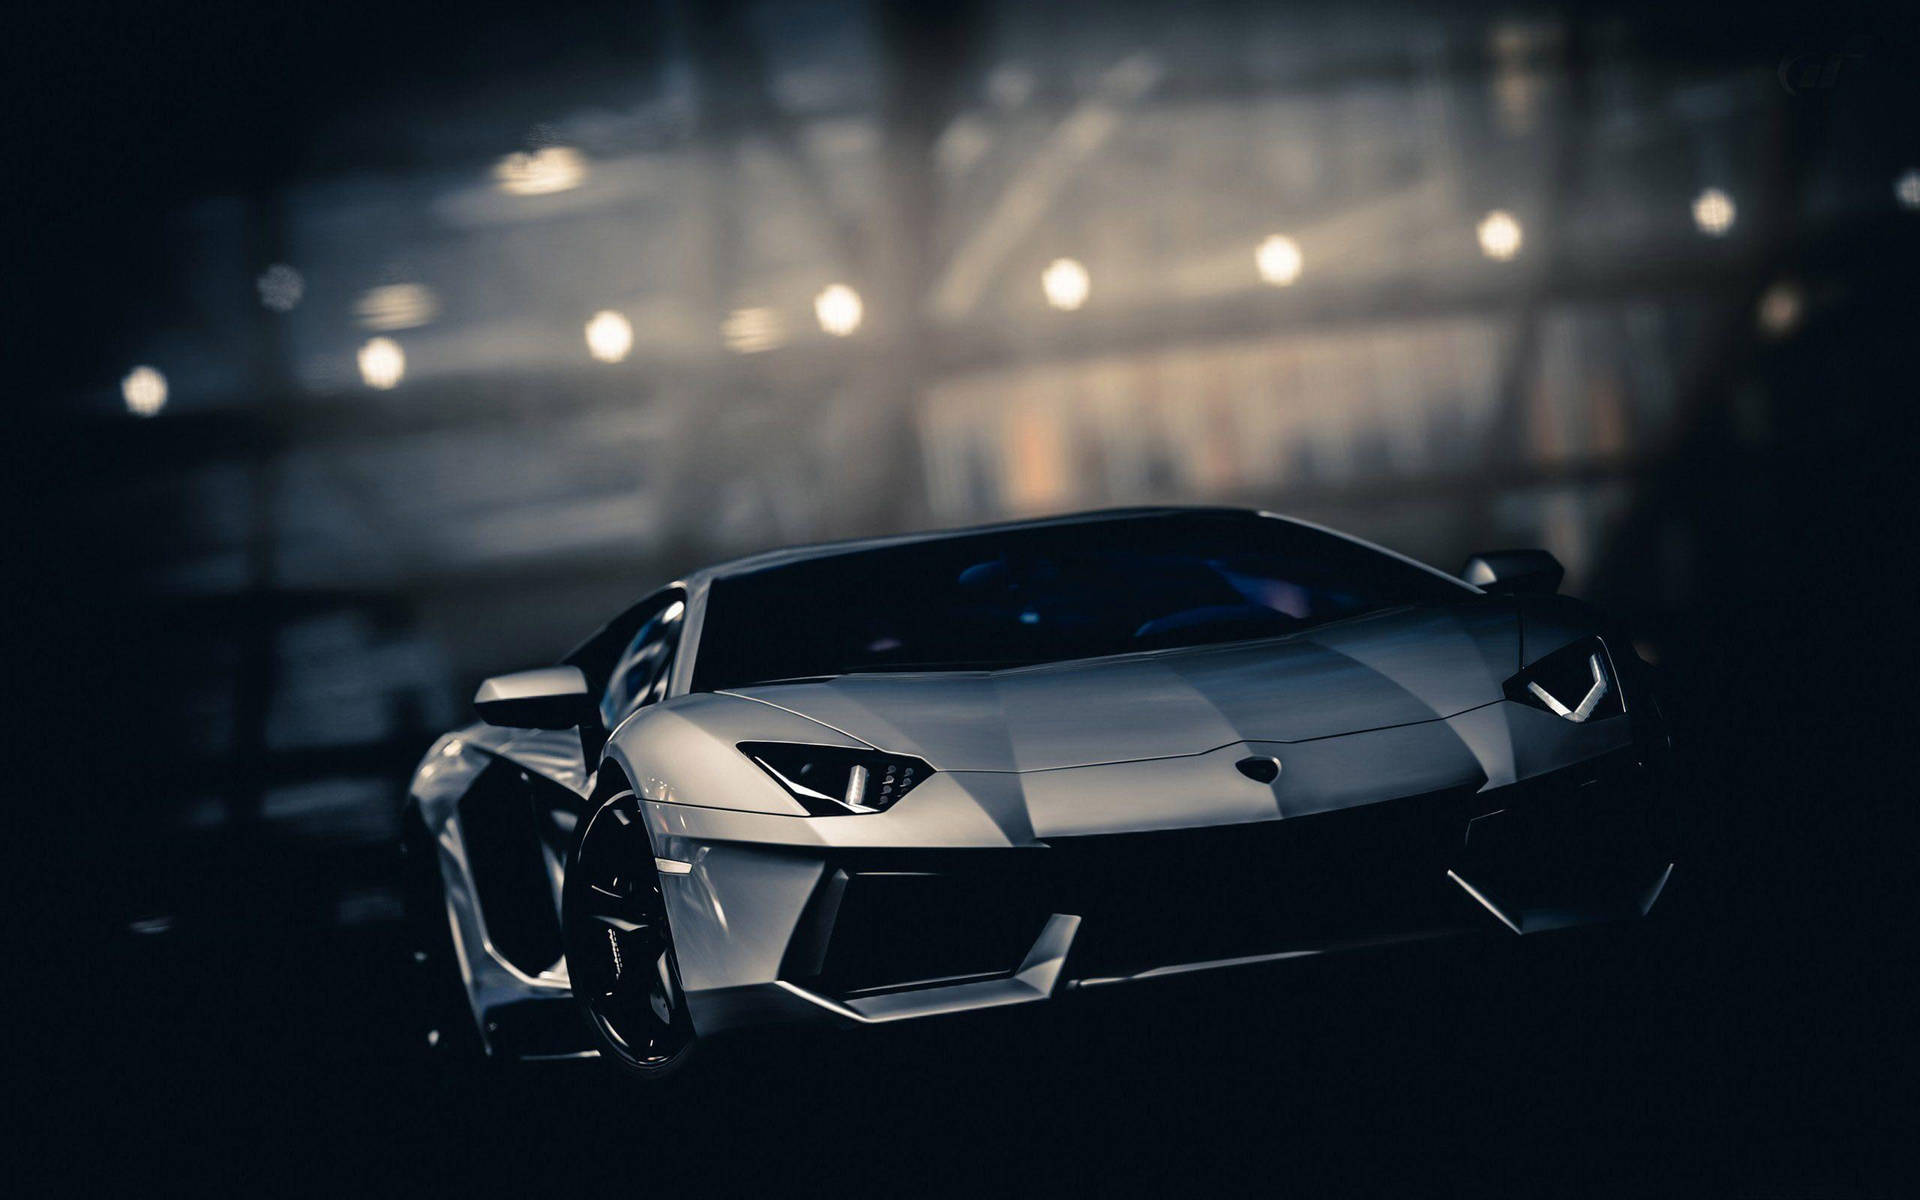 Cool Cars: Silver Lamborghini Wallpaper